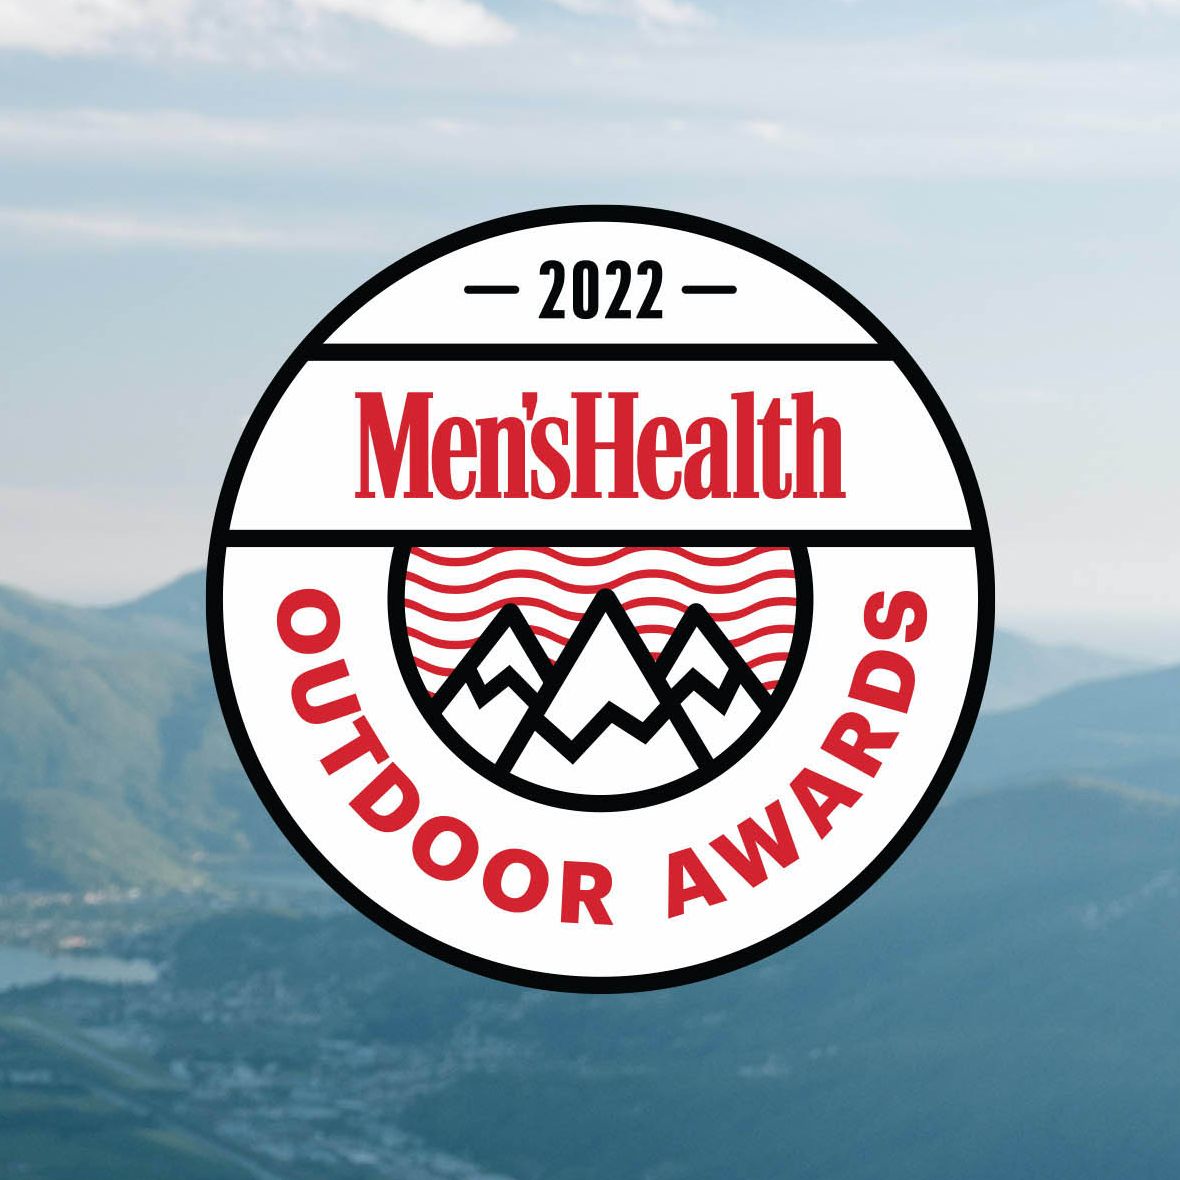 The Men's Health Outdoor Awards 2022